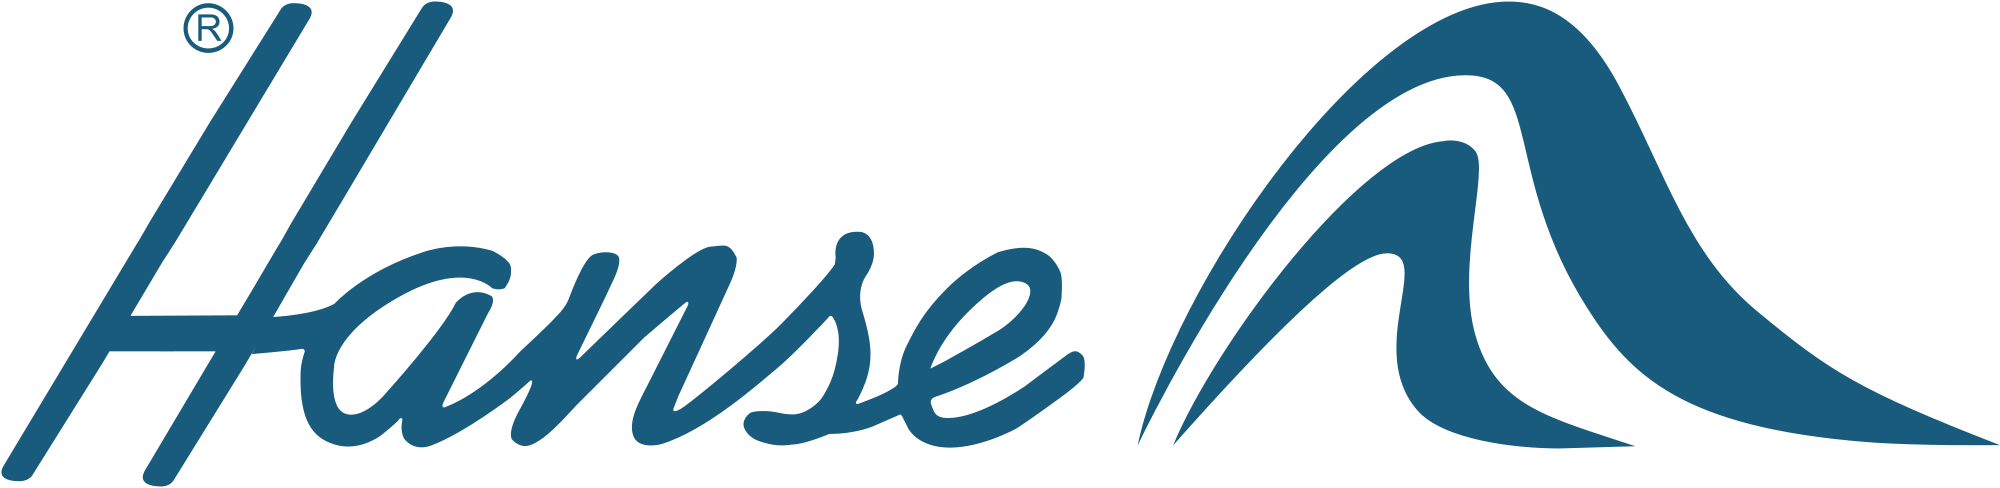 hanseyachts ag logo